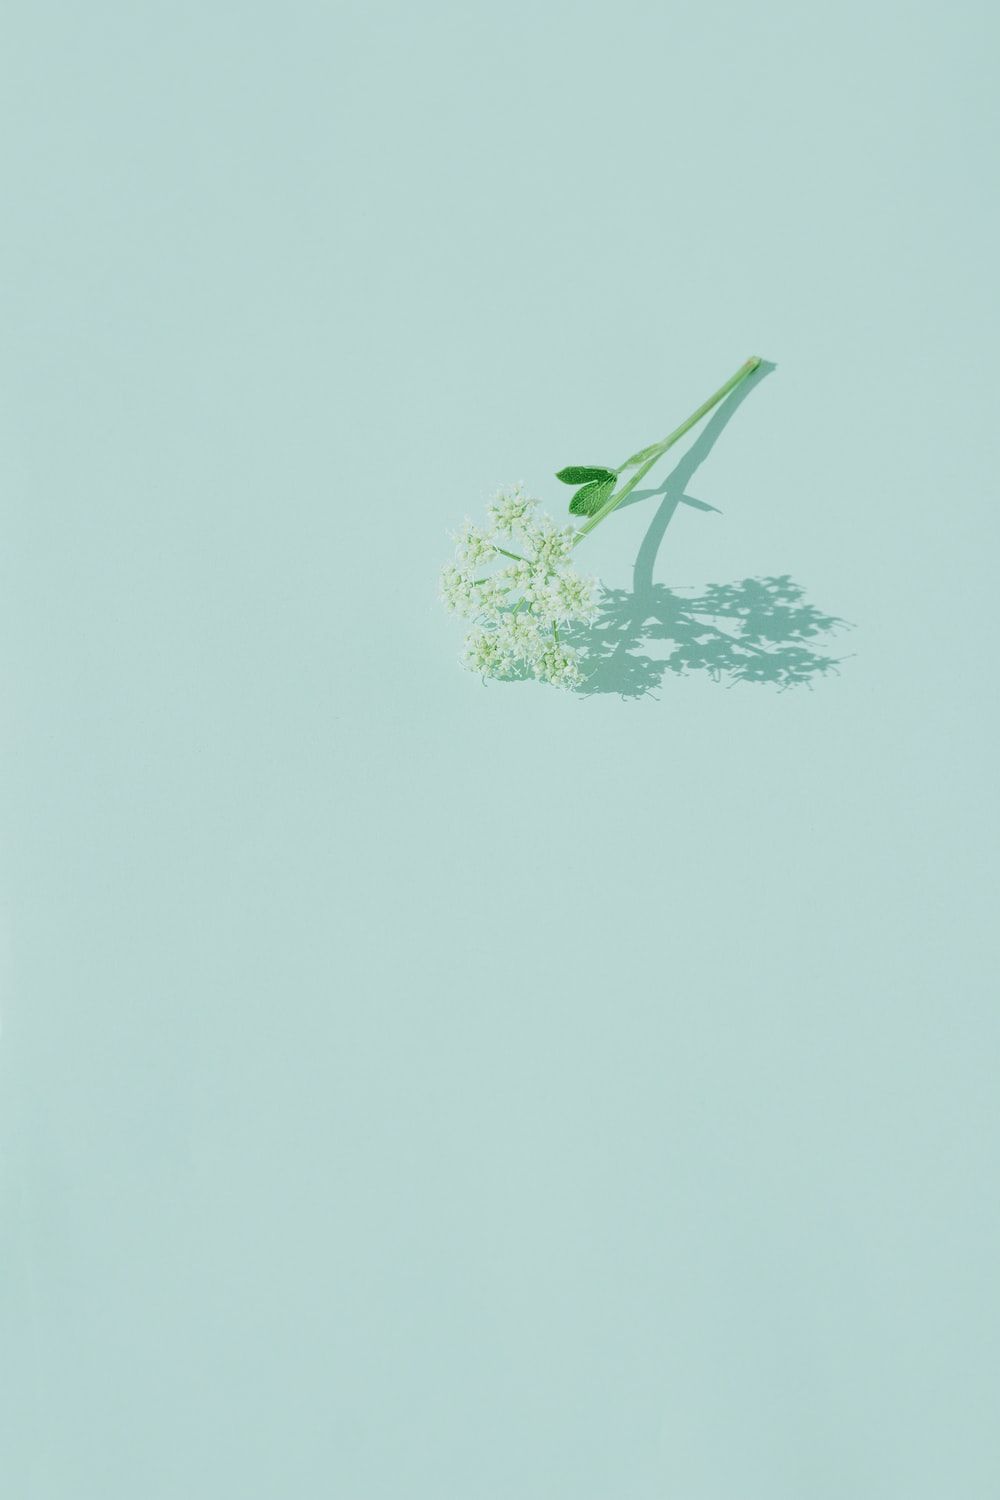 White flower on green surface - Pastel green